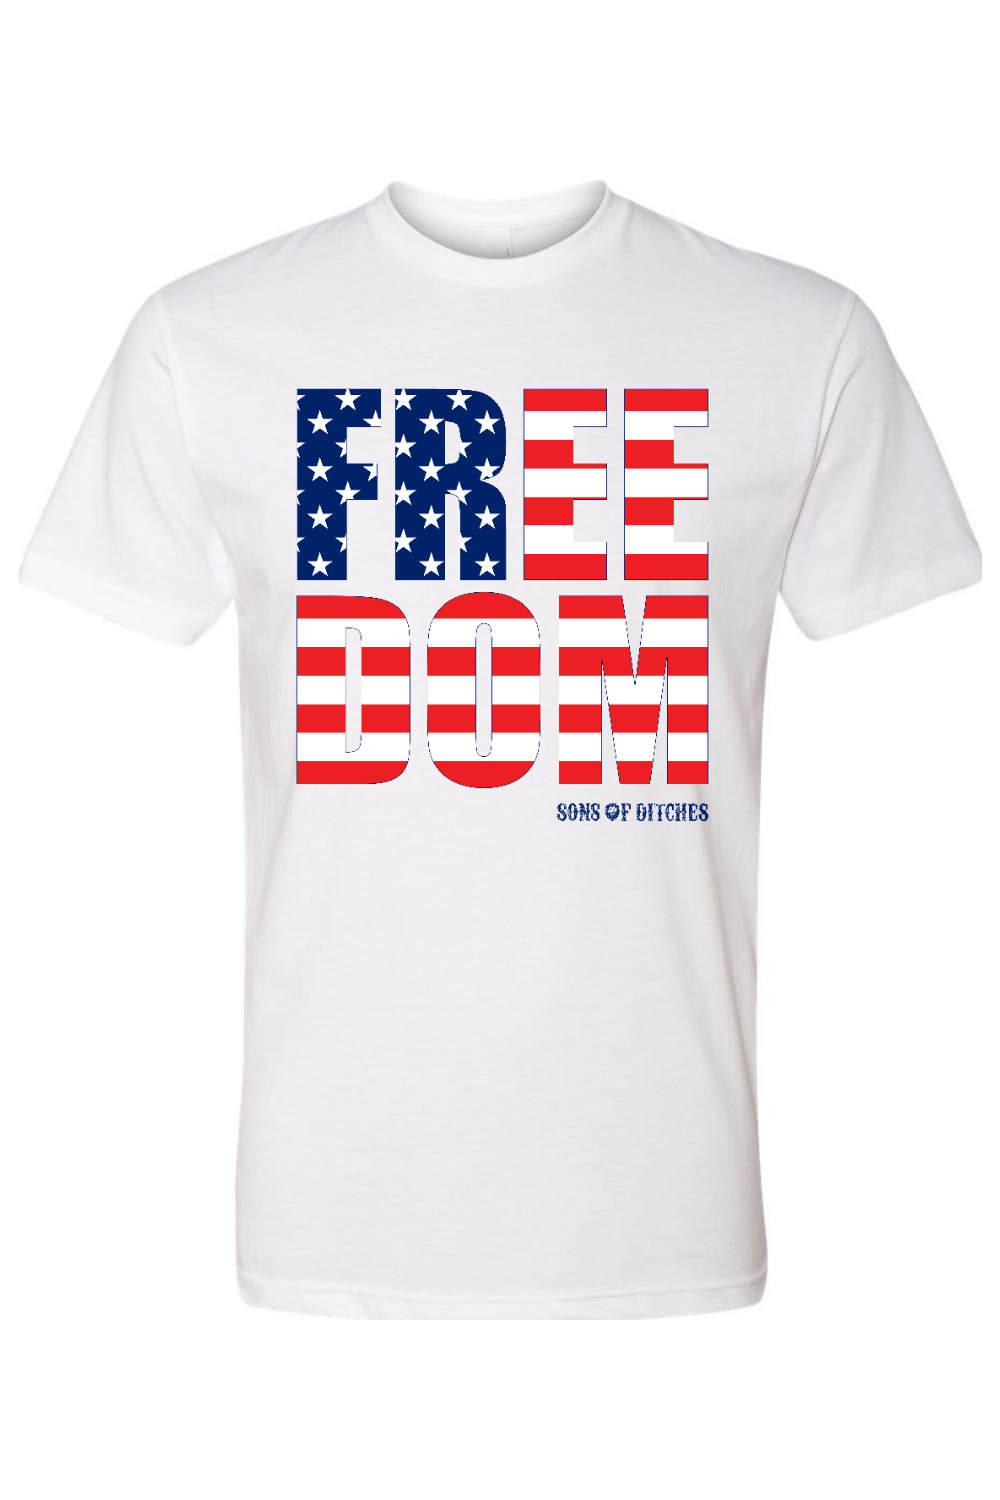 New FREEDOM T-shirt